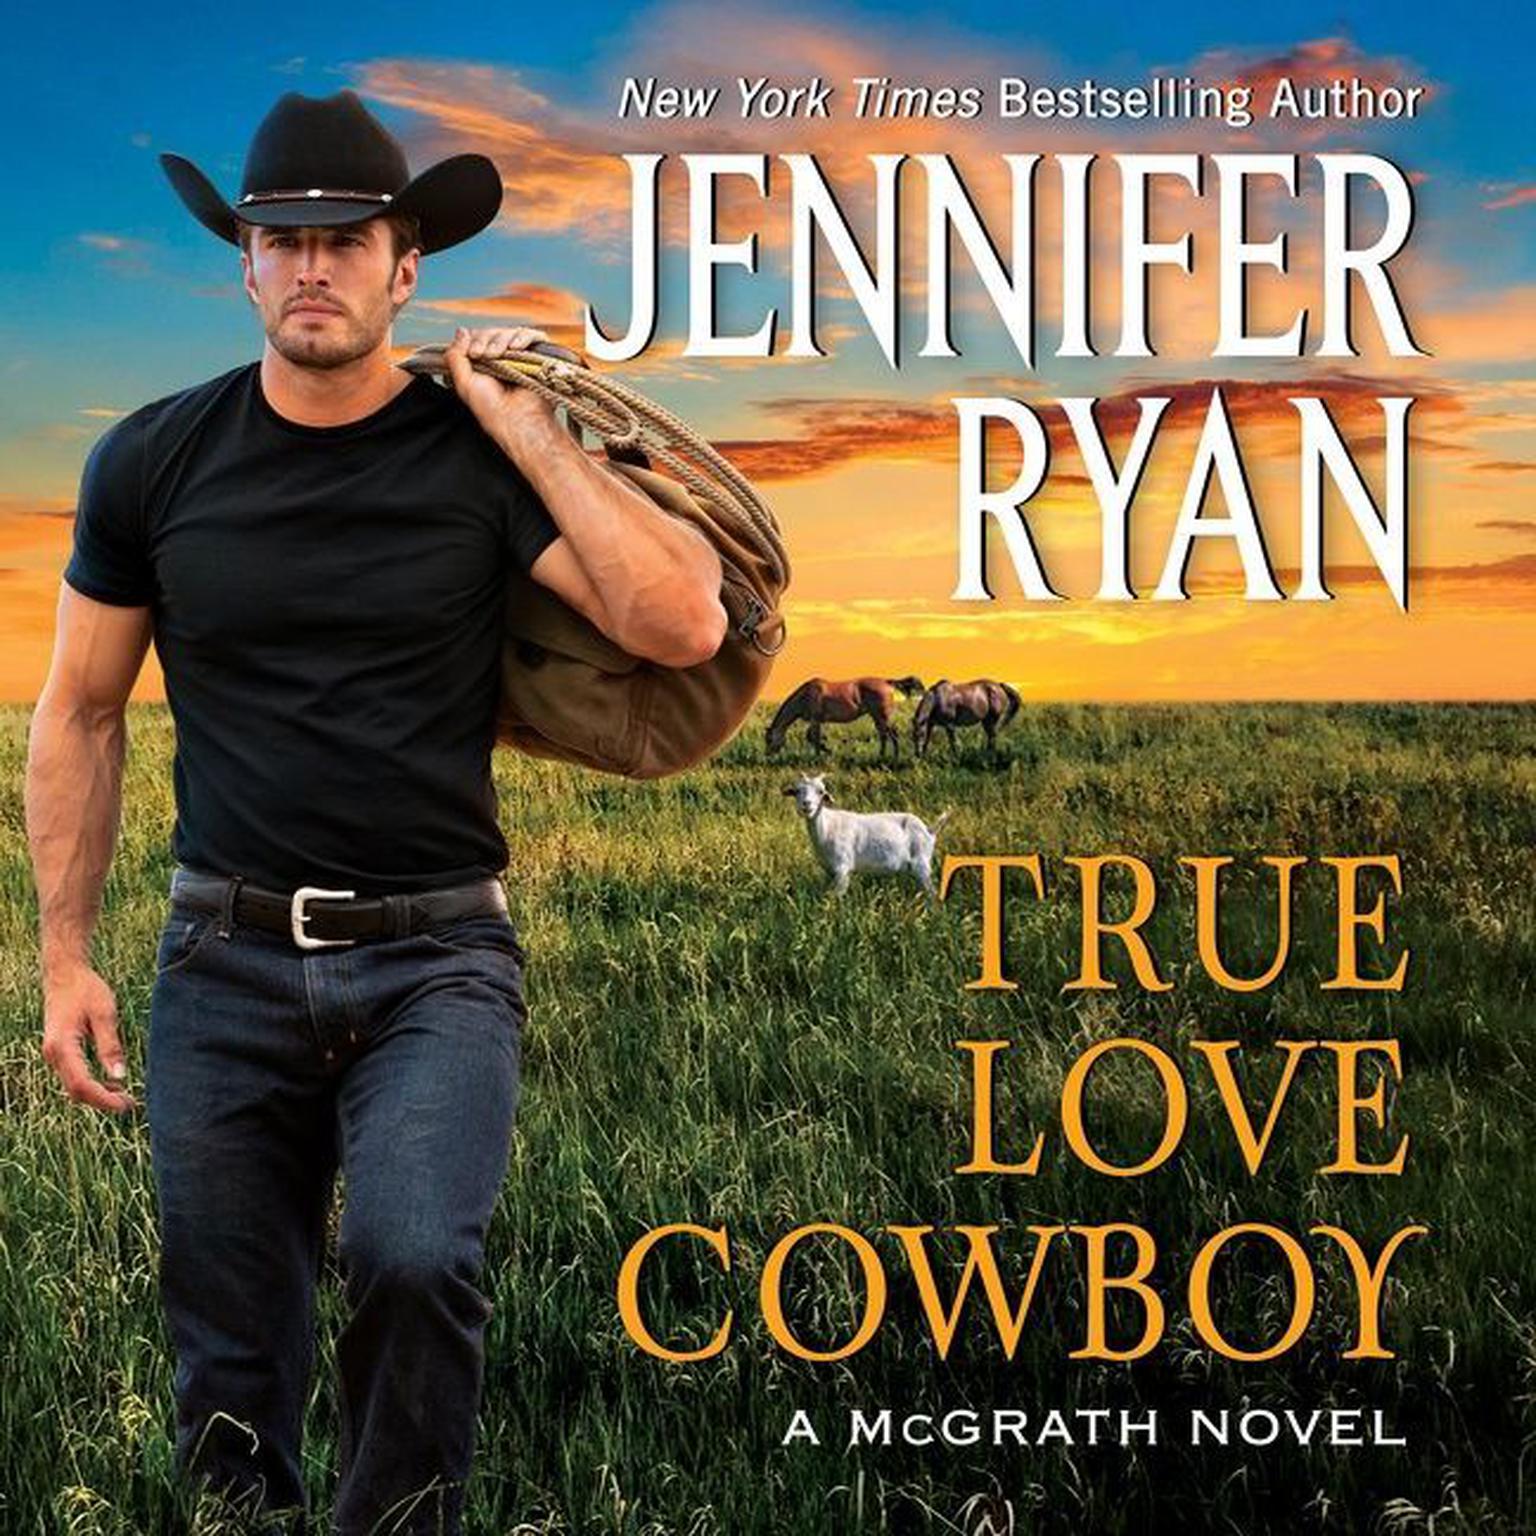 True Love Cowboy: A McGrath Novel Audiobook, by Jennifer Ryan